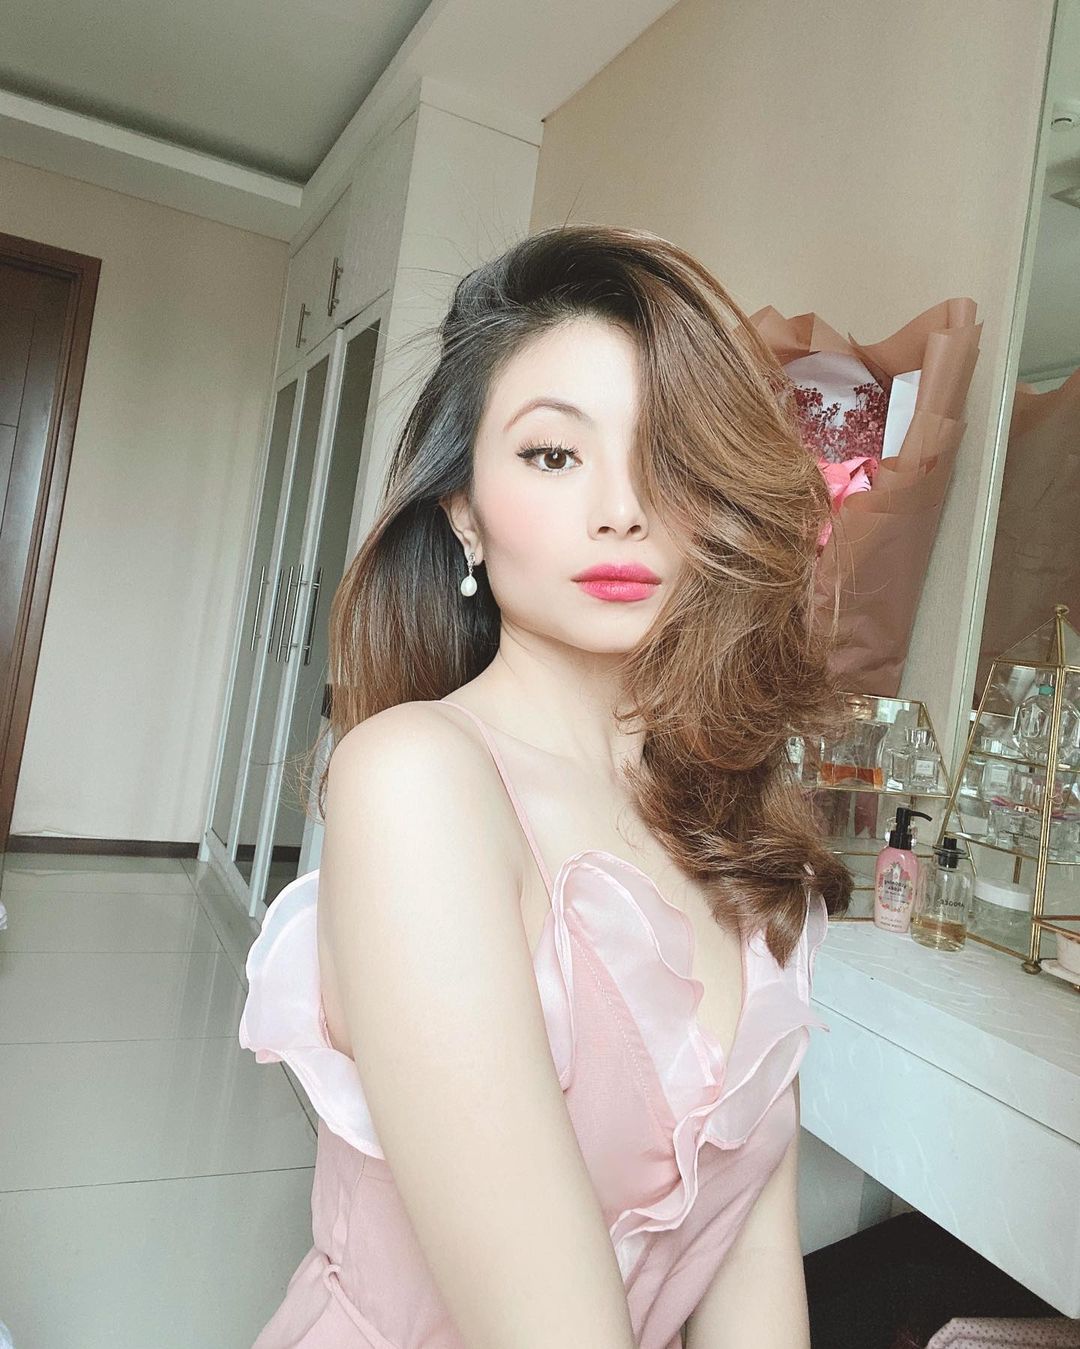 Profil Monica Chua, Presenter CNBC Indonesia yang Cantik dan Pintar